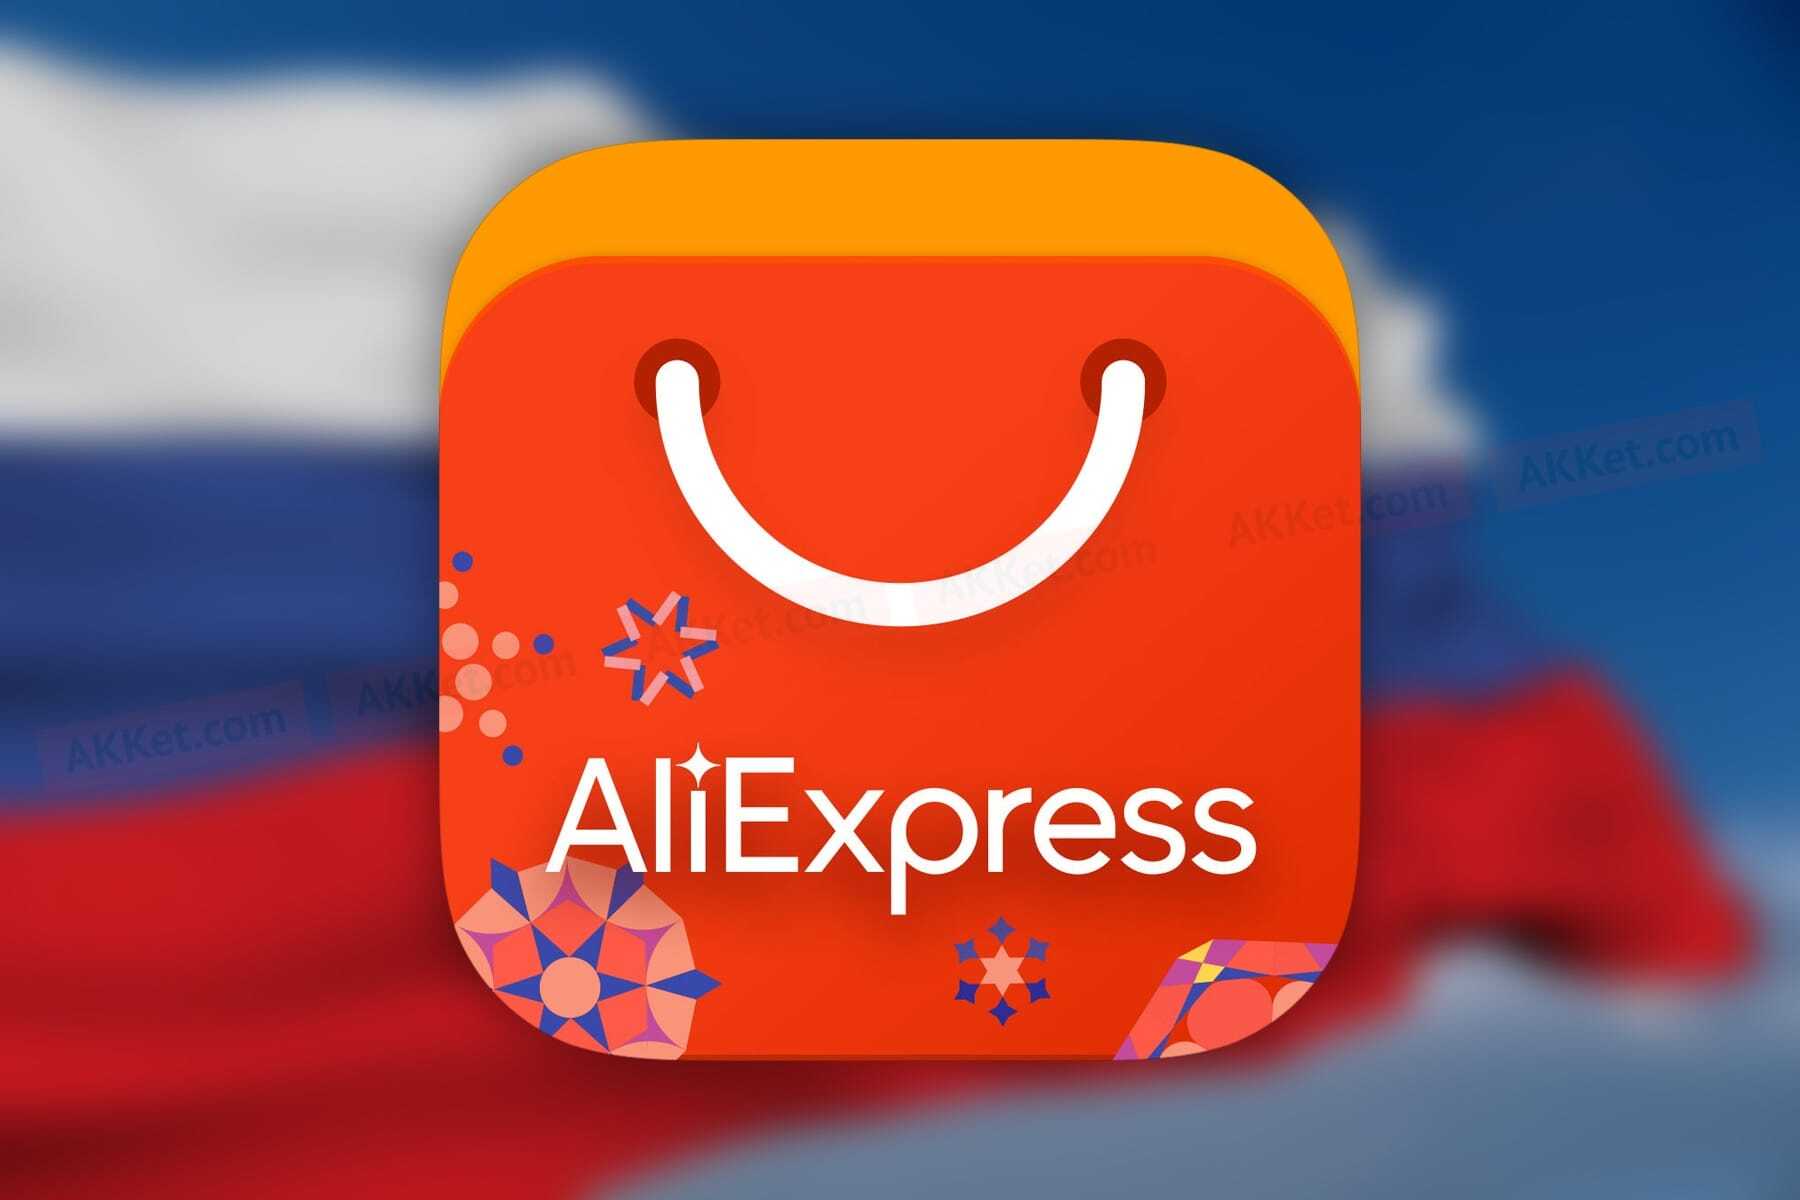     aliexpress     